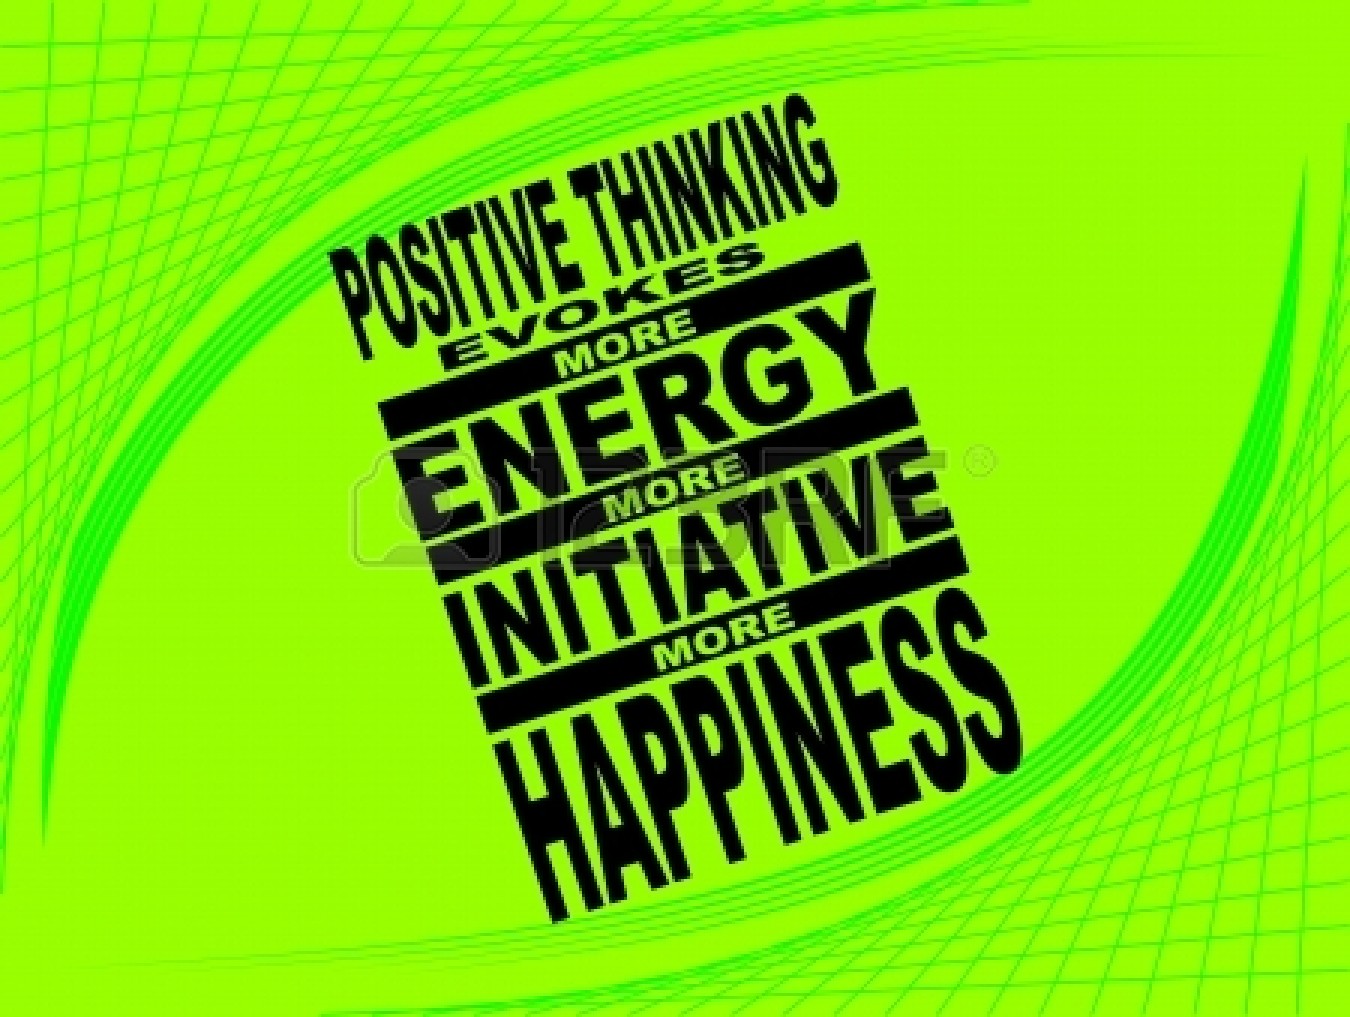 Positive Thinking Wallpaper